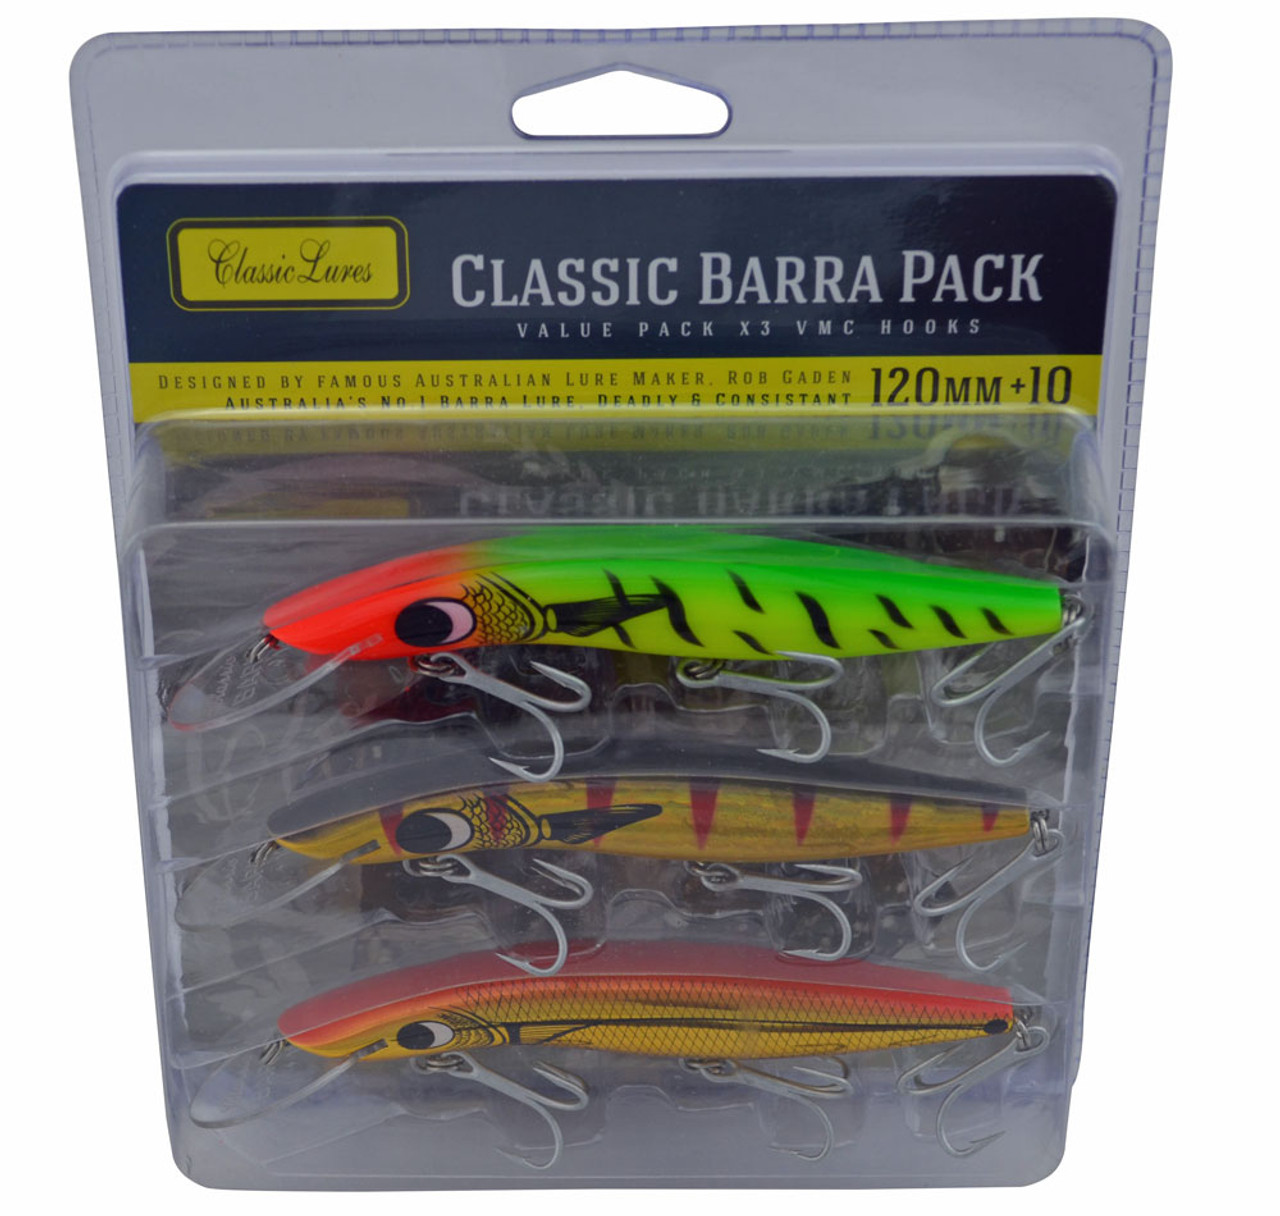 Classic Barra Lure Pack - 3 fishing lures for barramundi